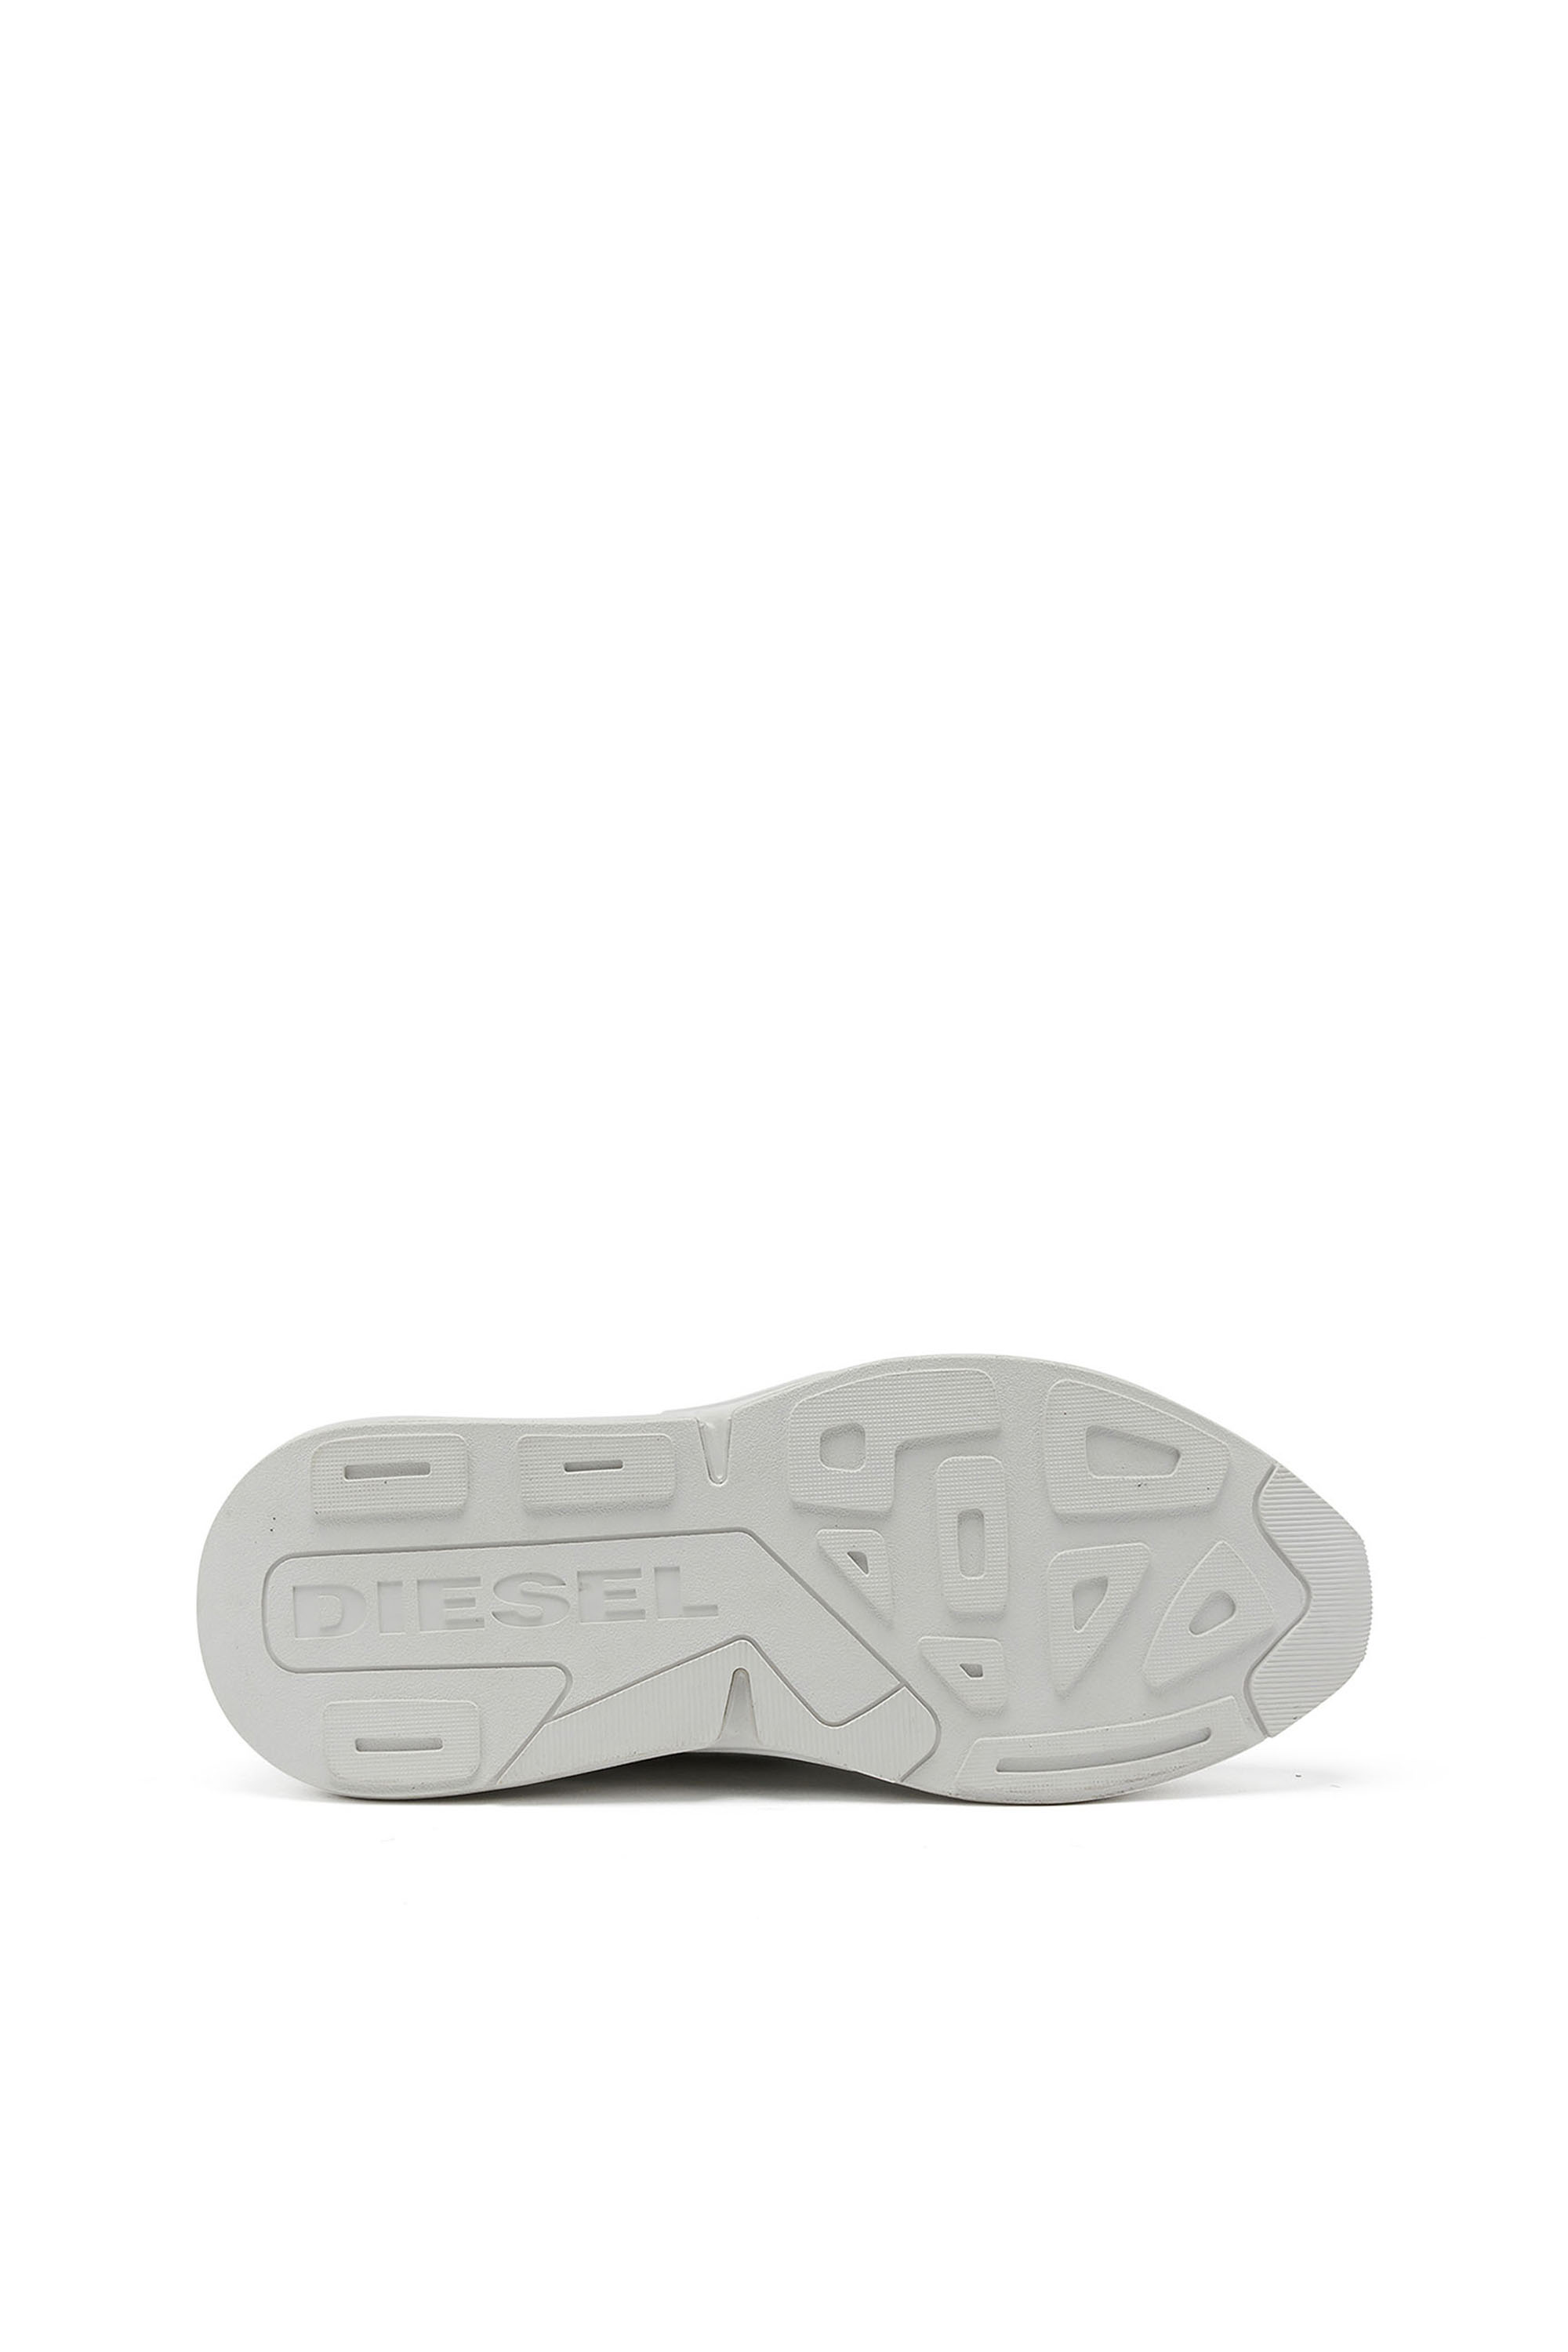 Diesel - S-SERENDIPITY SPORT, Homme S-Serendipity-Sneakers en cuir avec superpositions graphiques in Blanc - Image 4